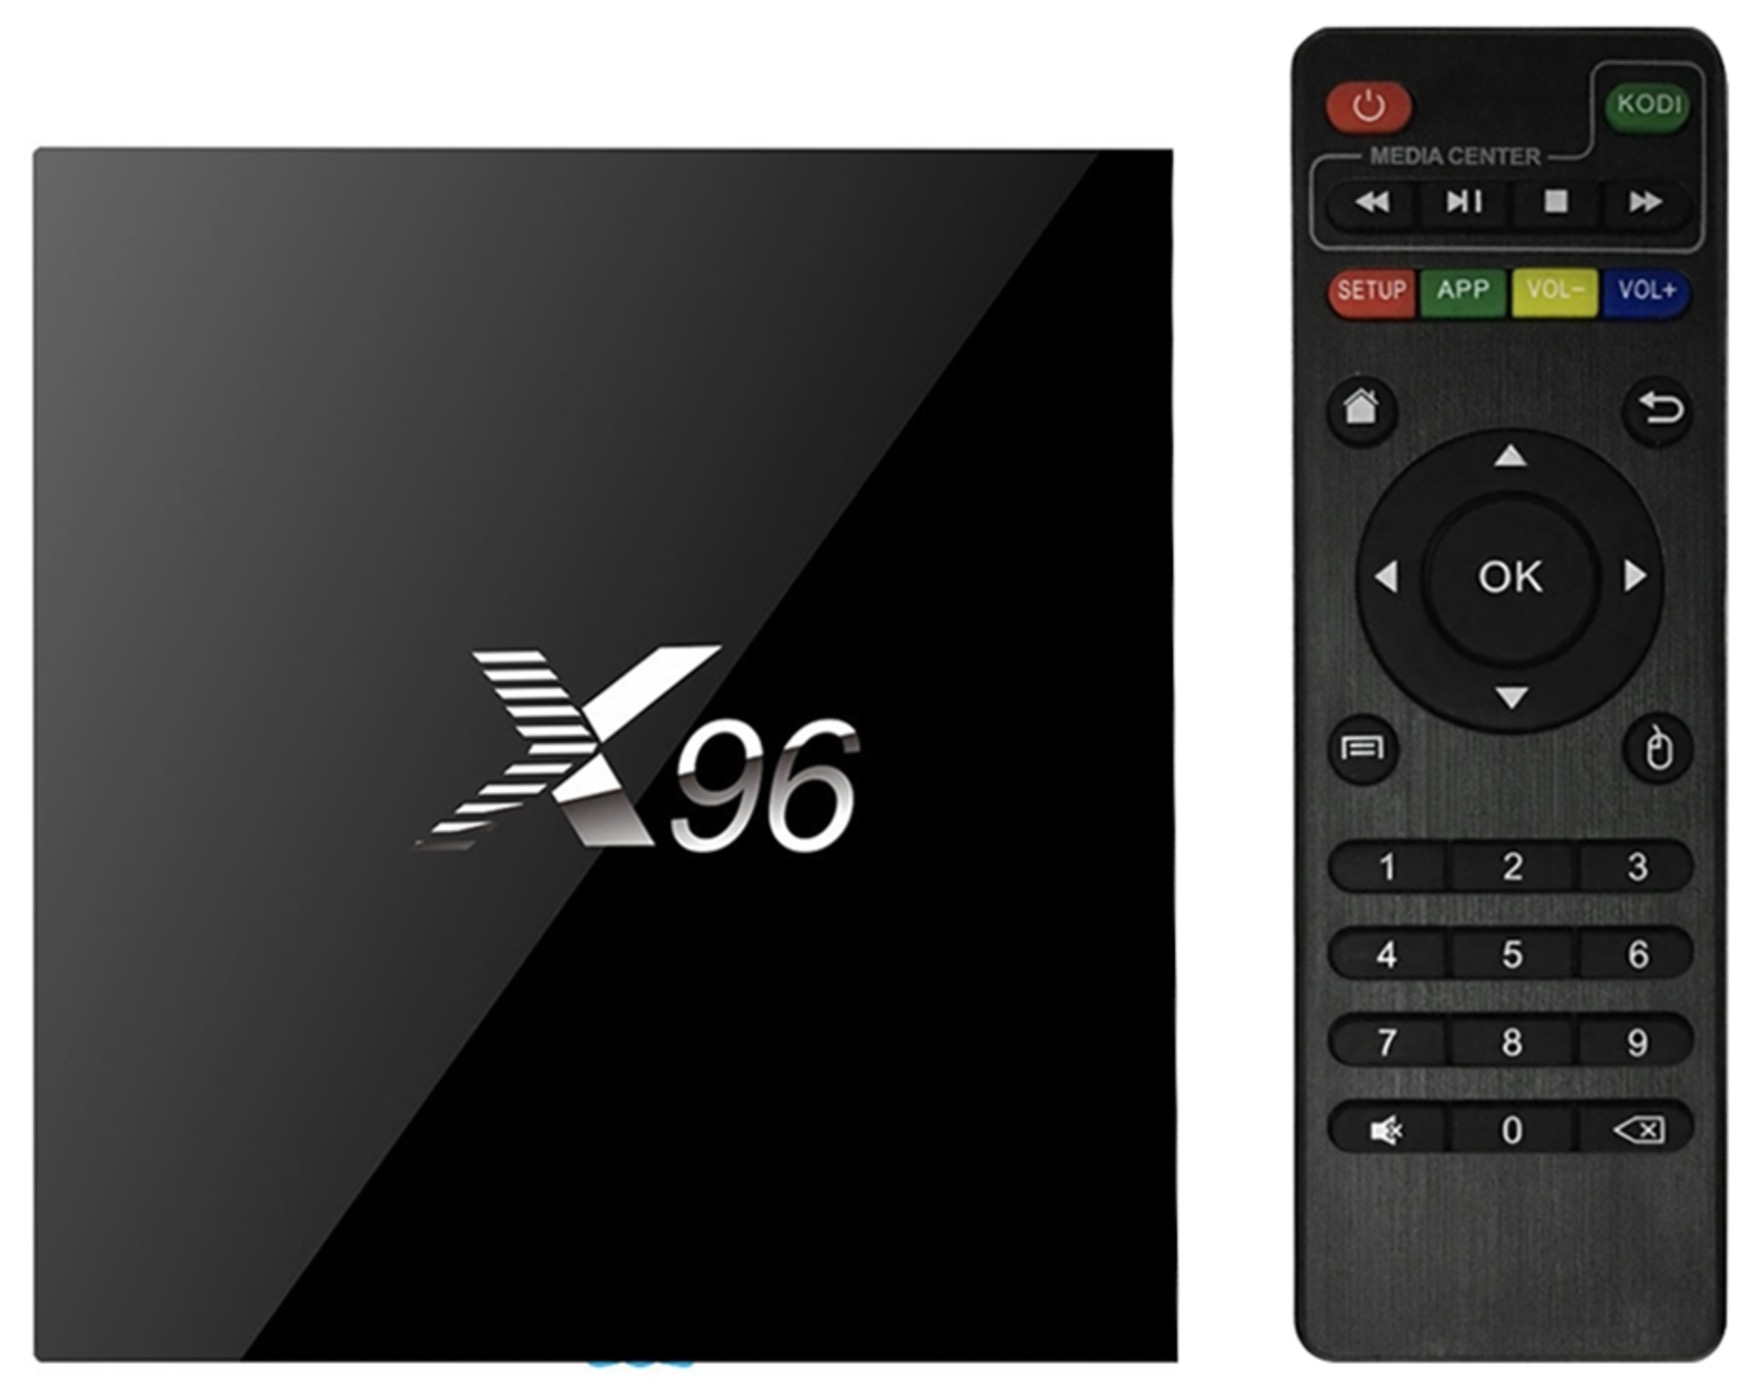 Amlogic S905X Smart TV Box (Android 6.0, Quad Core, 2GB, 16GB) für nur 30,98 Euro inkl. Versand